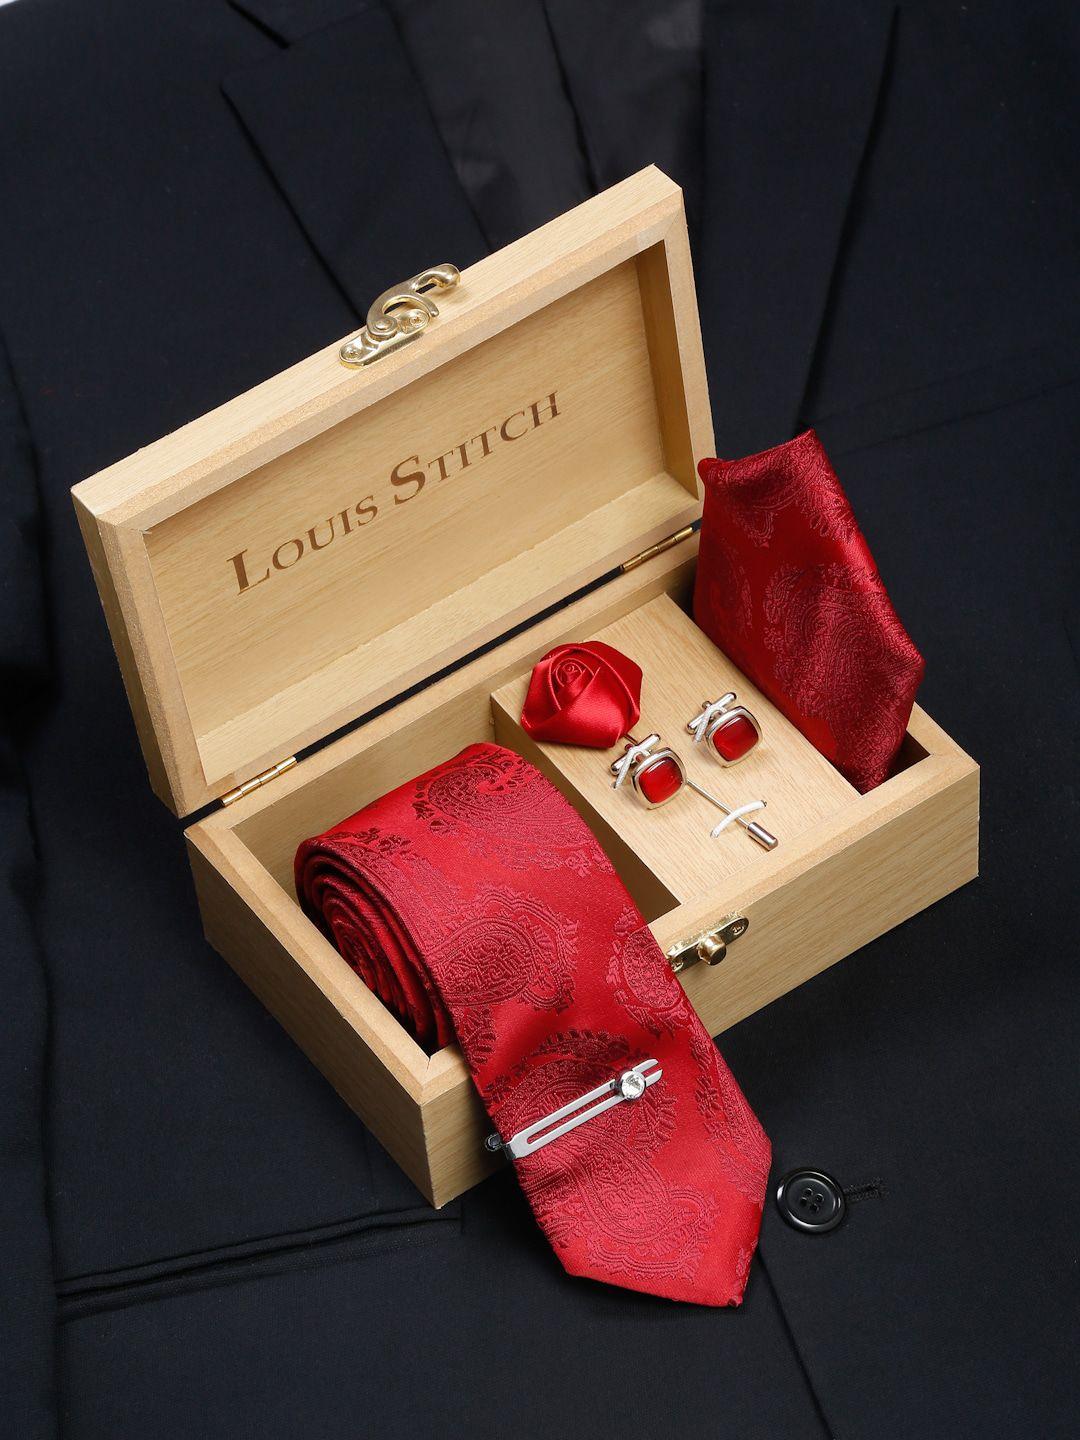 louis stitch men red italian silk formal tie accessory gift set